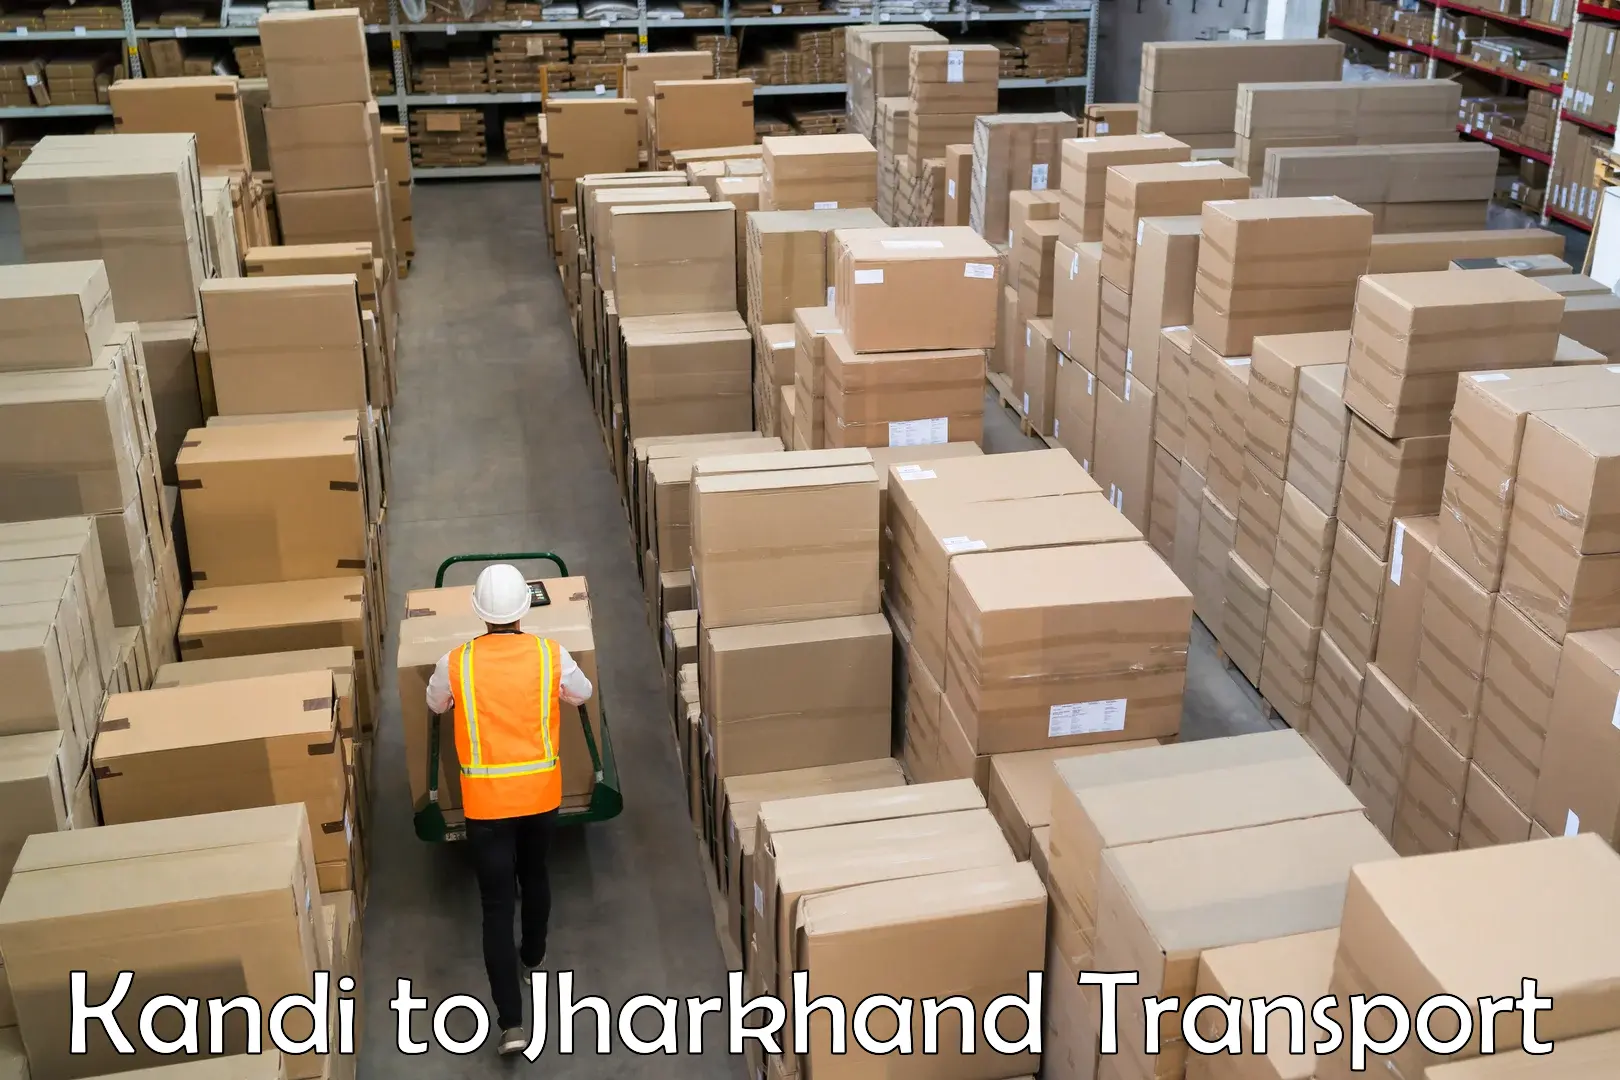 Online transport service Kandi to Jamshedpur